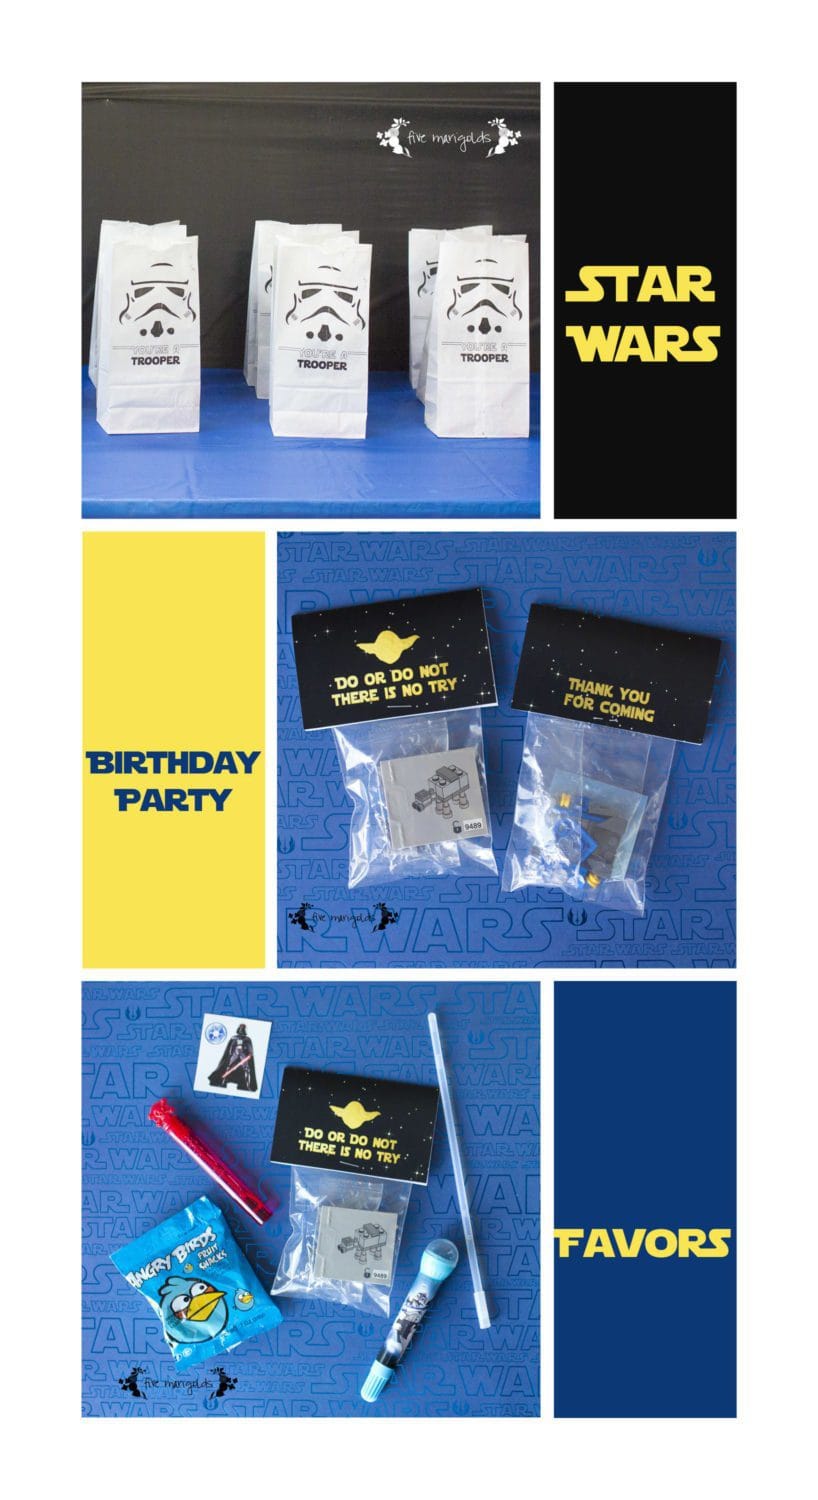 Star Wars Lego Birthday Party Favor Bags | www.fivemarigolds.com